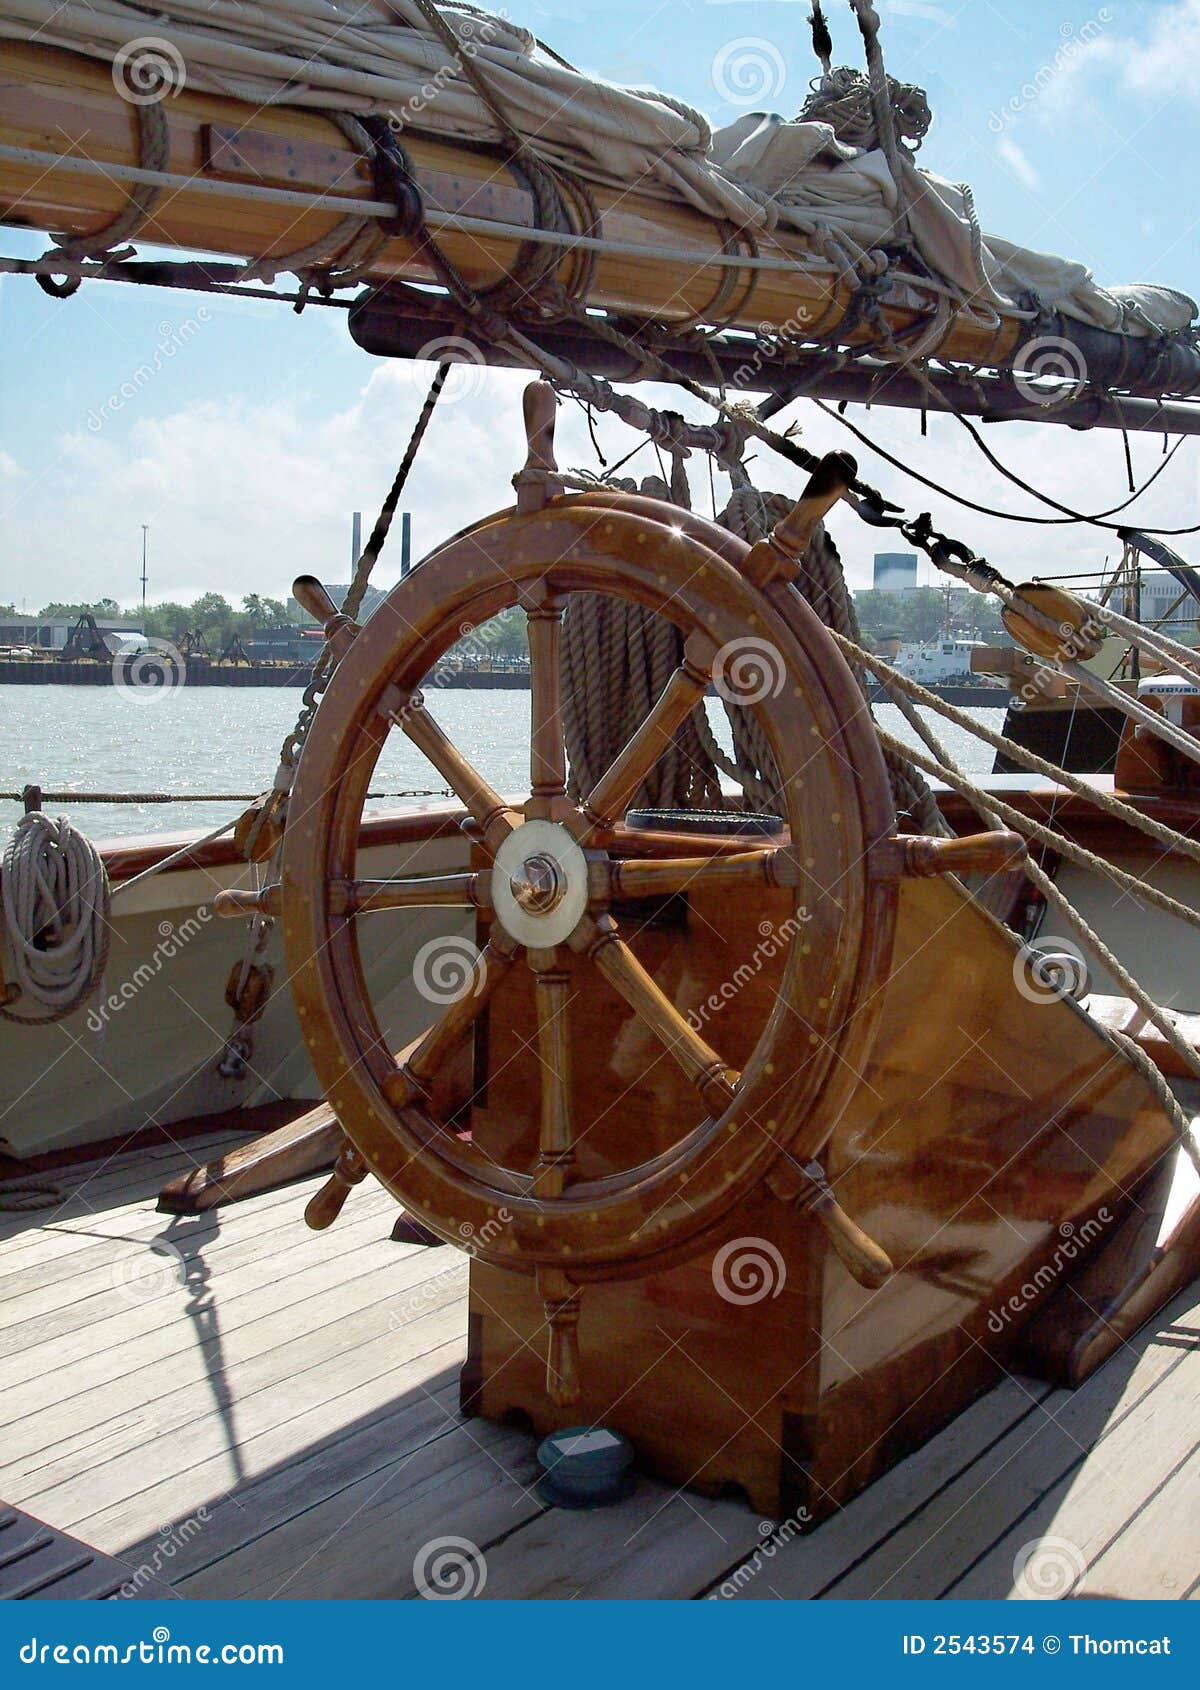 Ship Wheel stock photo. Image of sails, docked, historical - 2543574